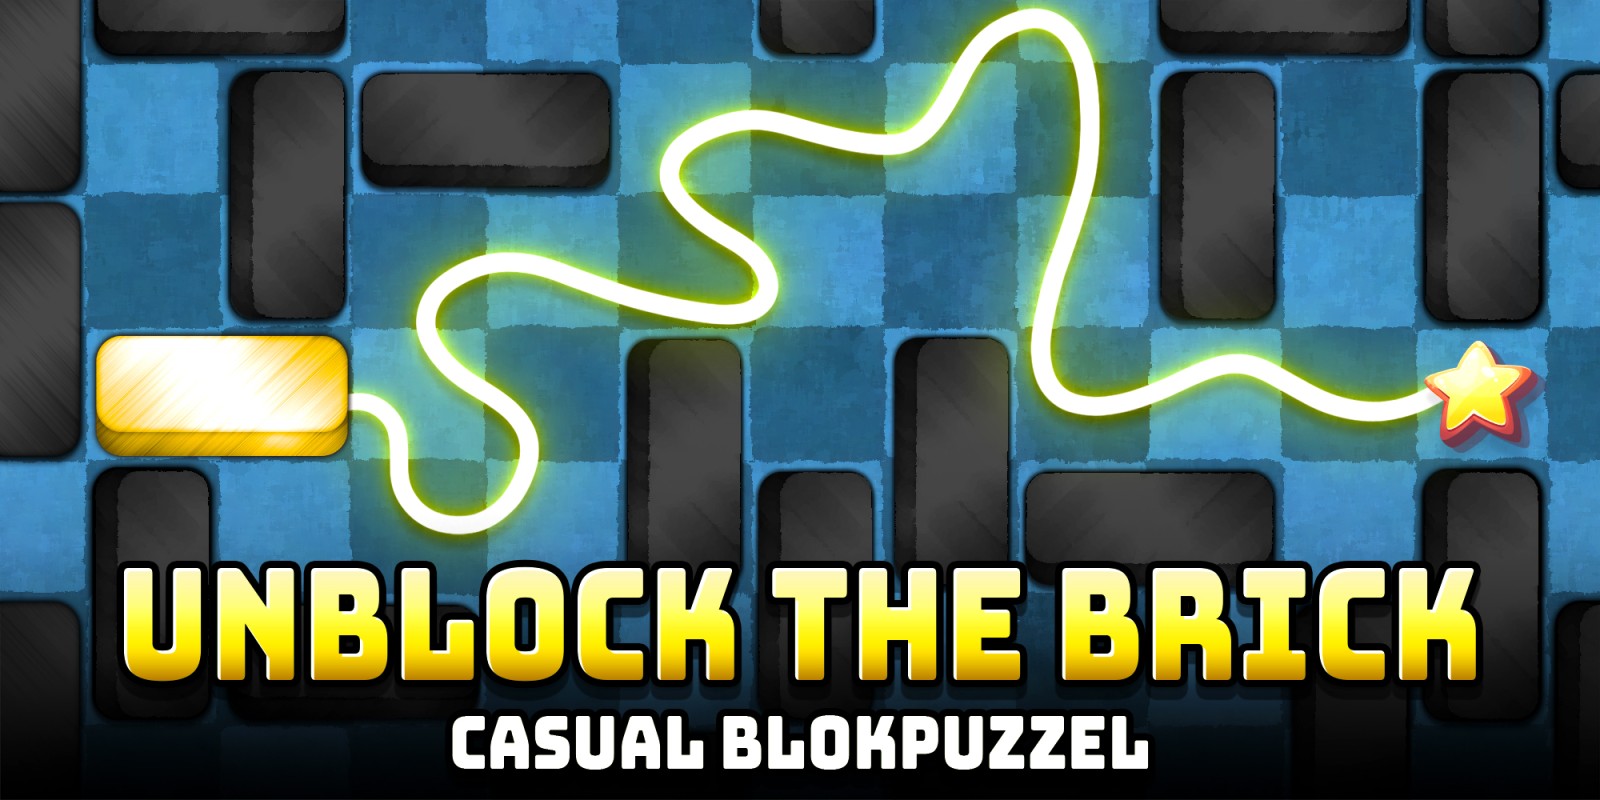 Unblock The Brick: Casual blokpuzzel